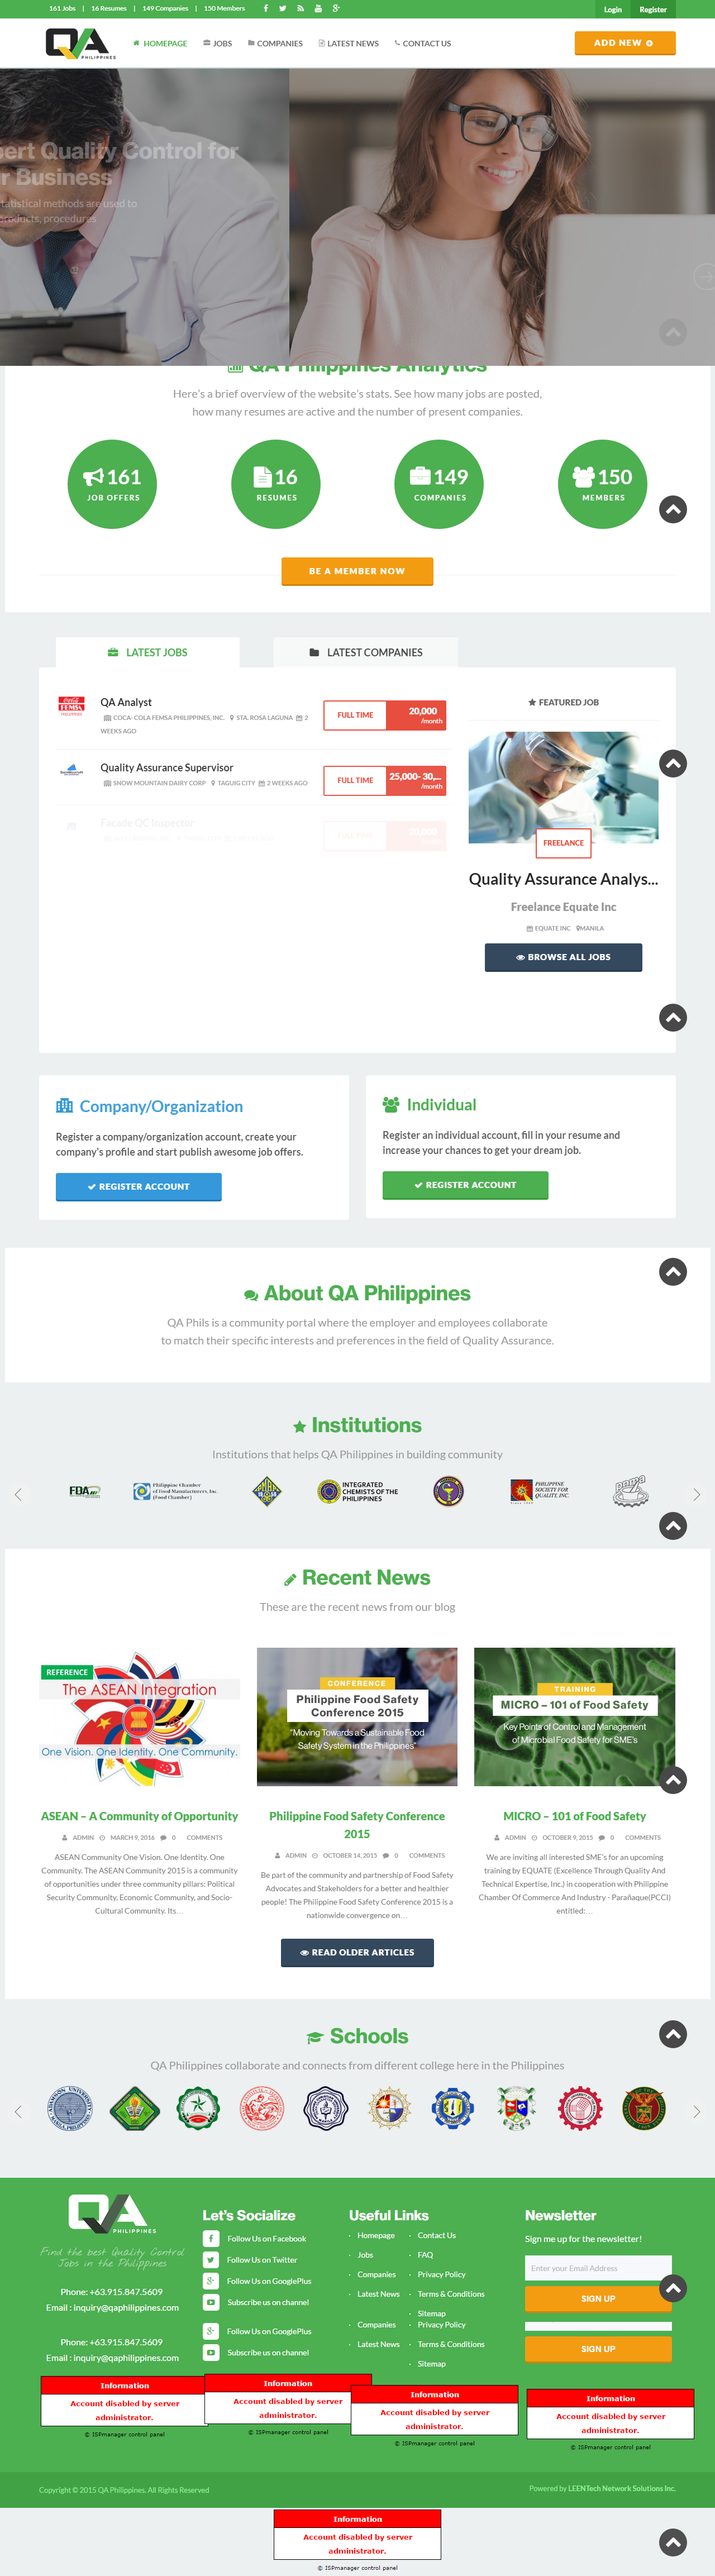 QA Philippines - Educational Portal for Philippines